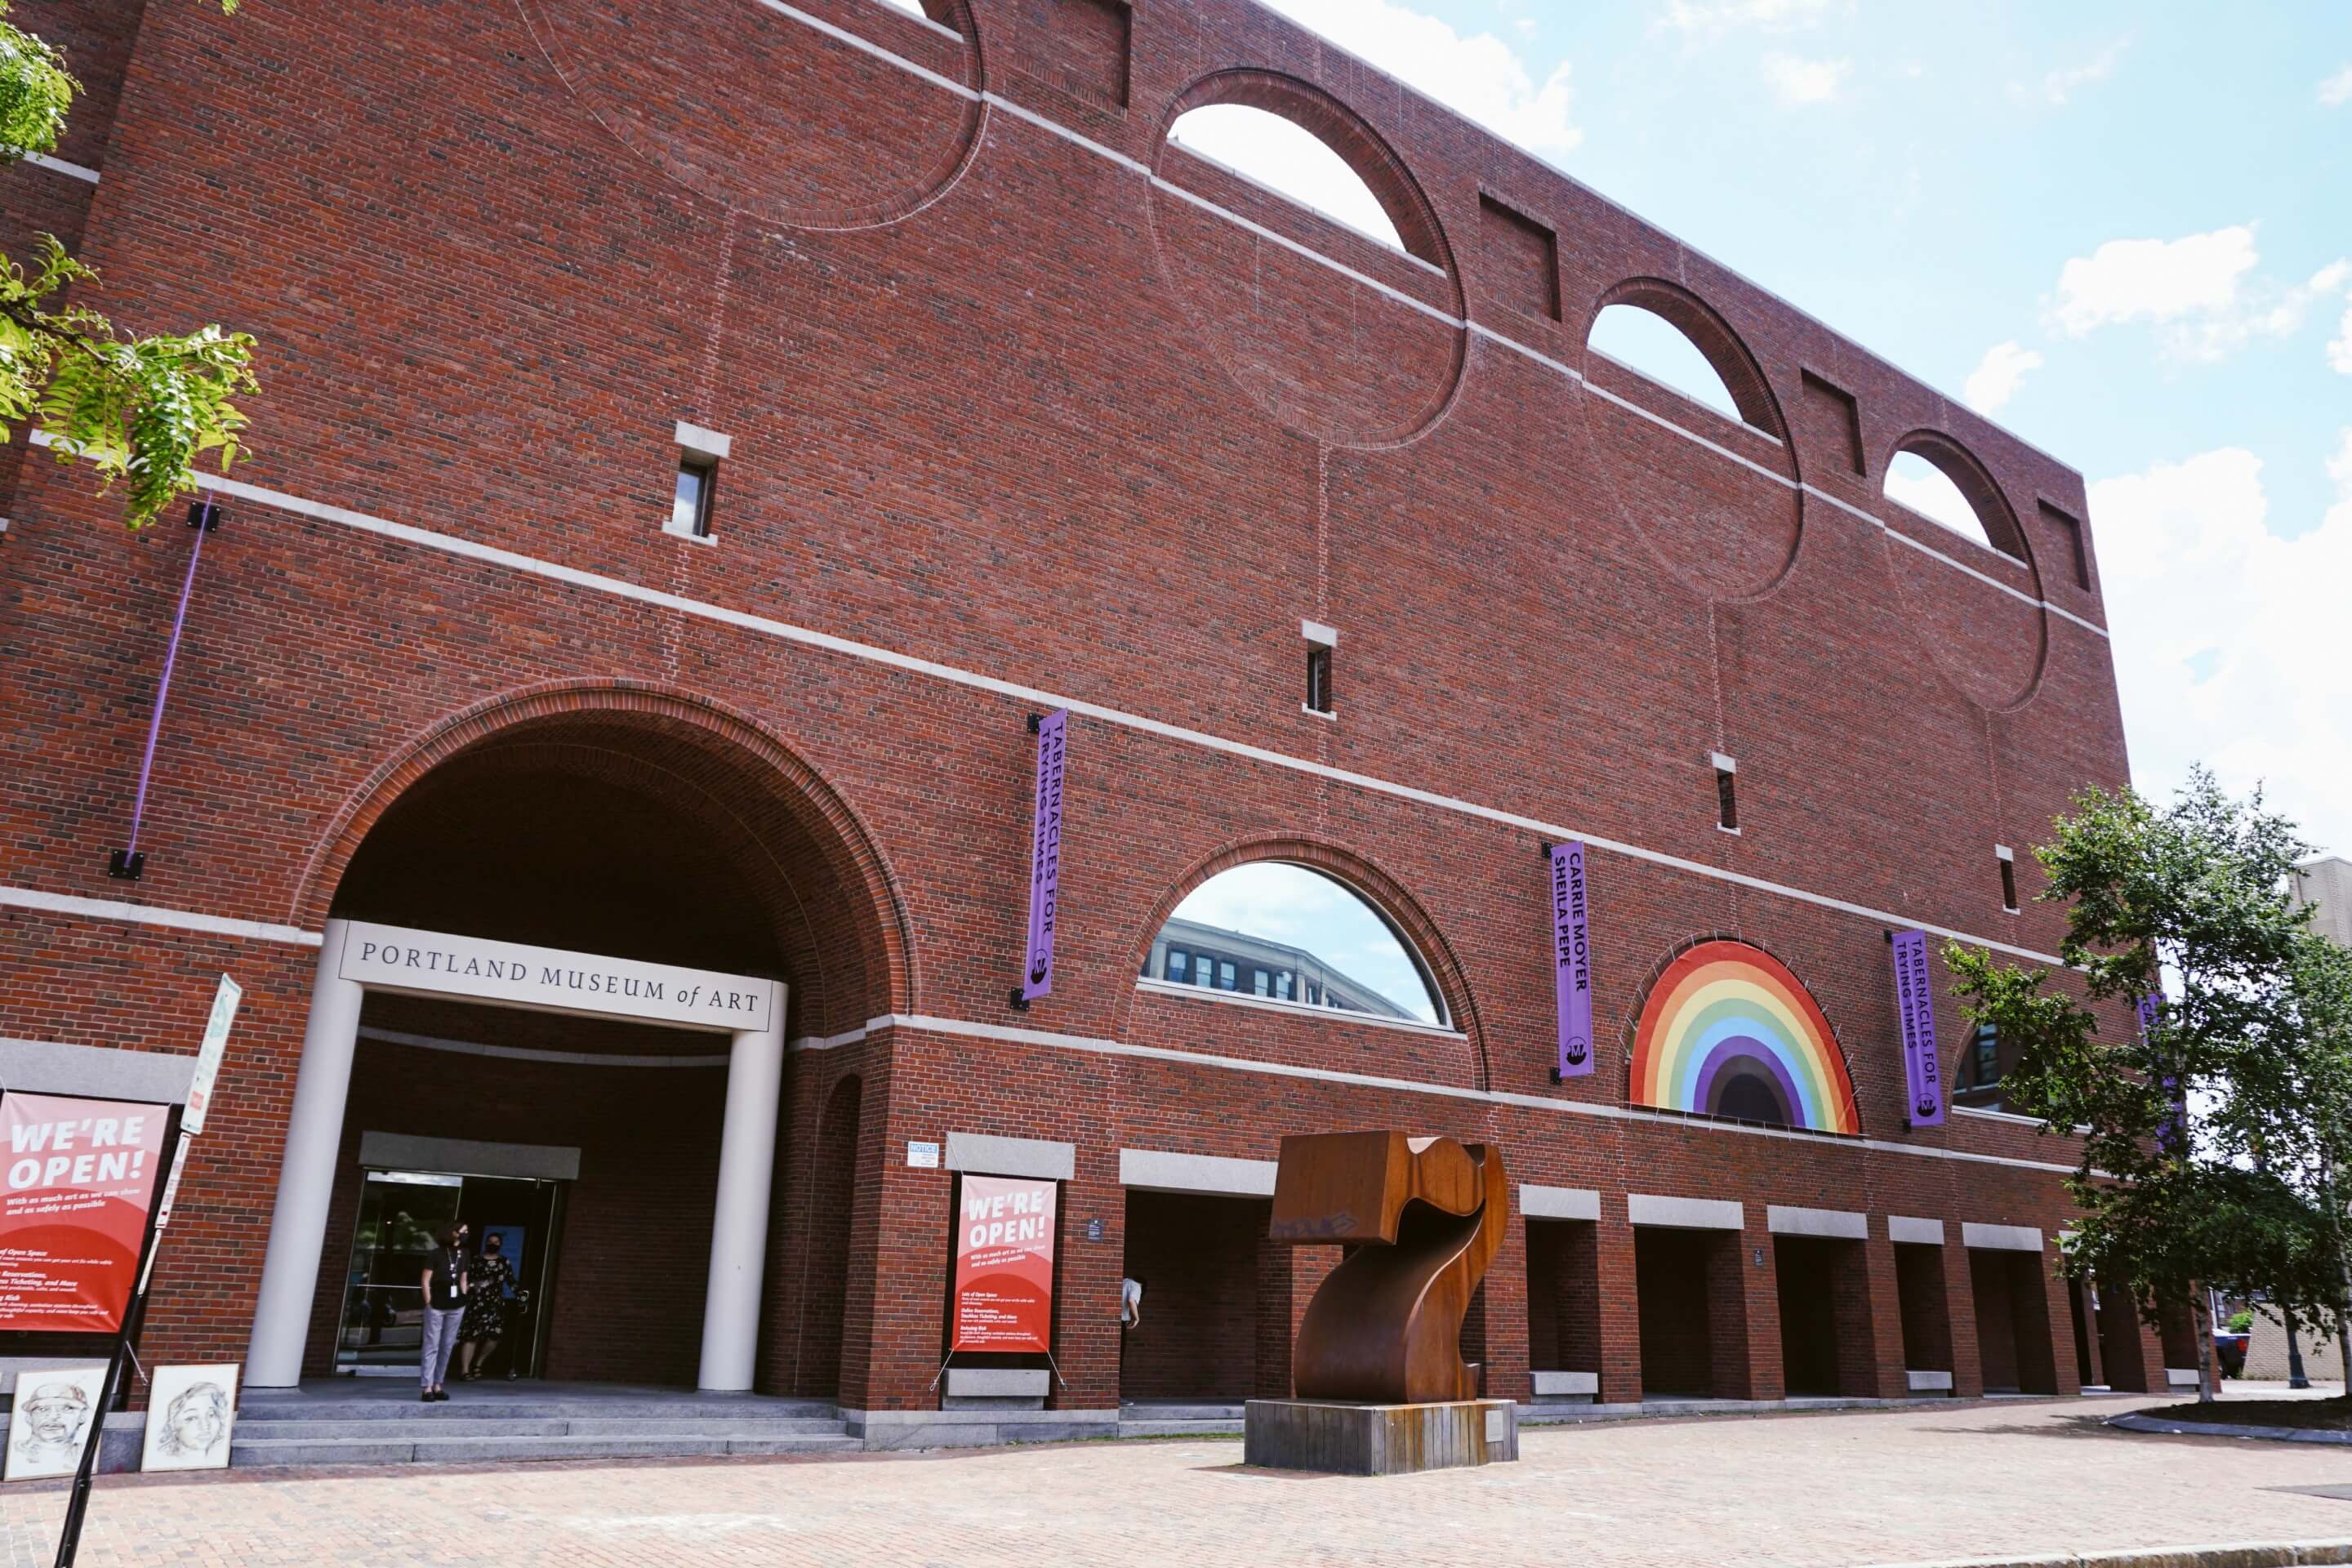 exterior of a brick-clad museum building